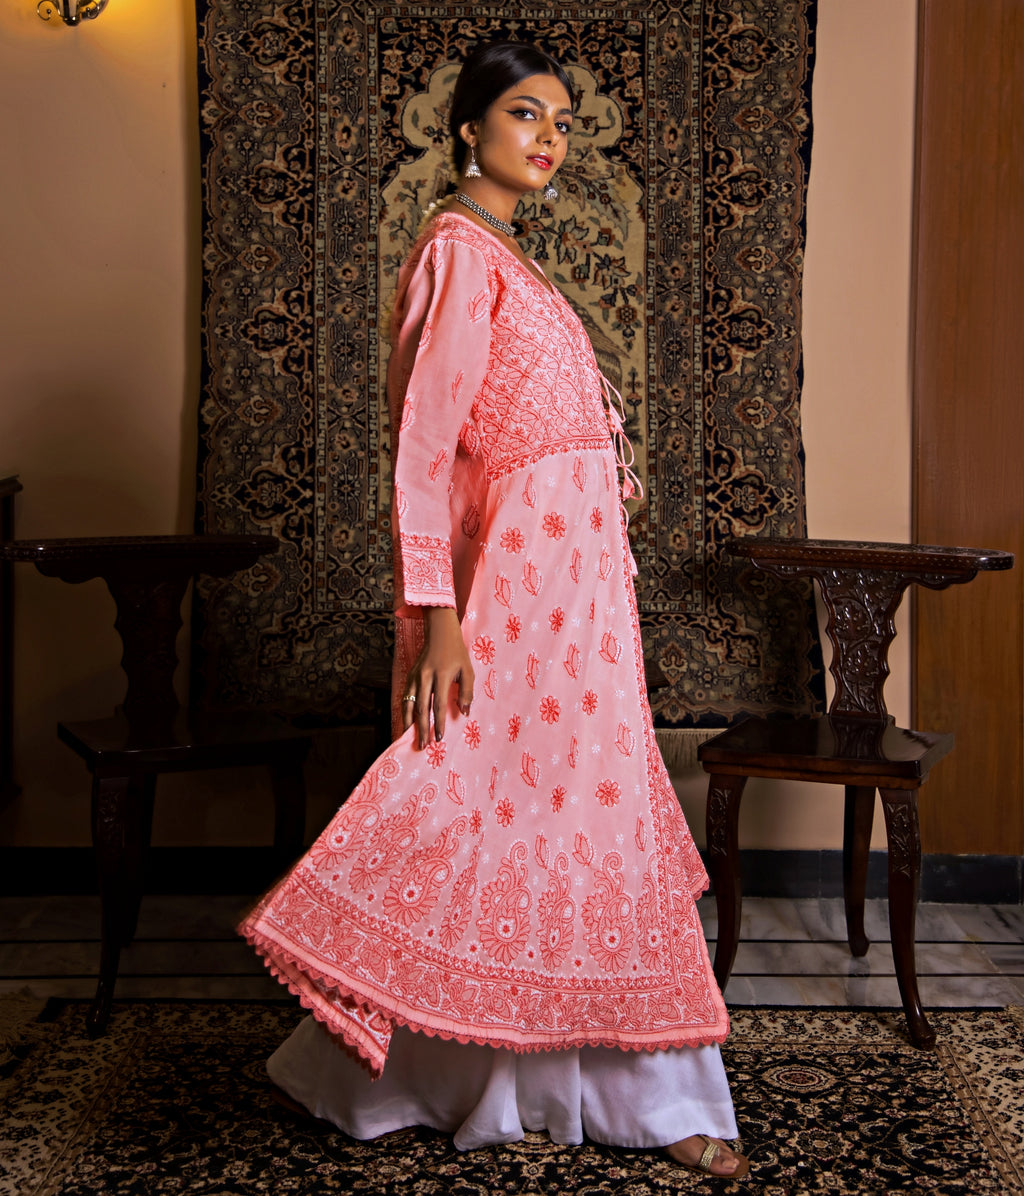 Aafrinish Zooni Sheikh Zooni-Sheikh Embroidery Pakistan Fashion Aafrinish Pink Angharka Carved Furniture Persian Rugs